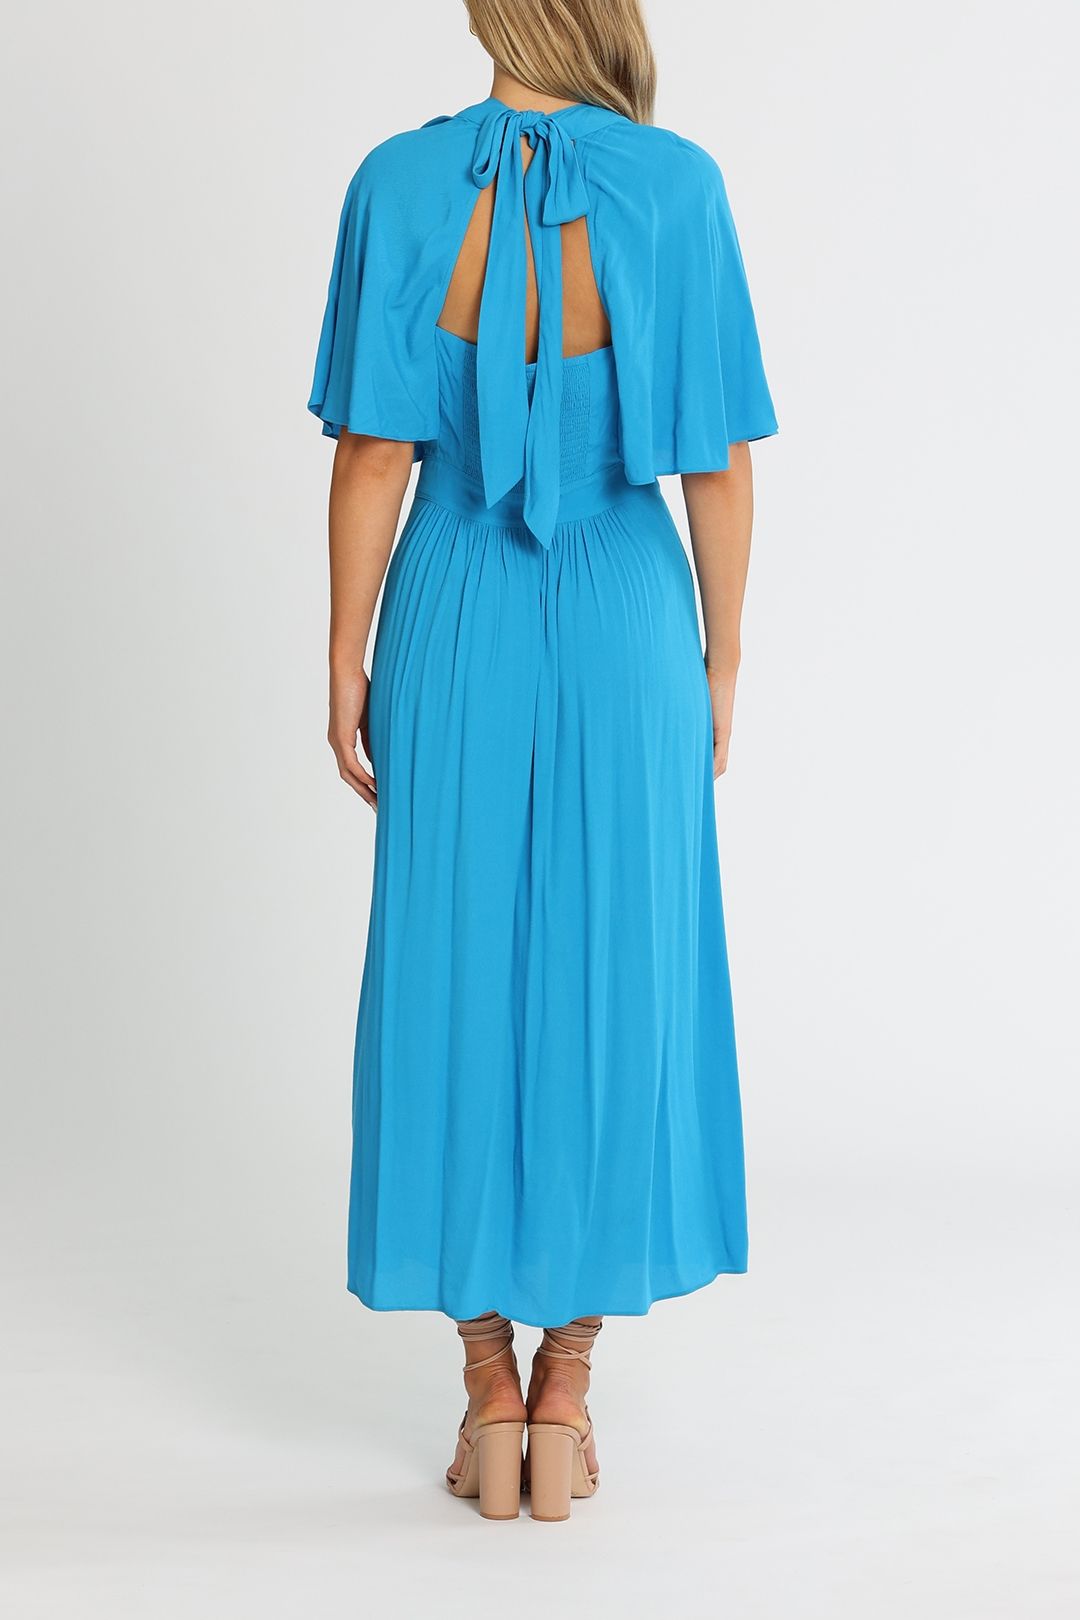 Whistles Amelia Cape Sleeve Dress Blue Cutout